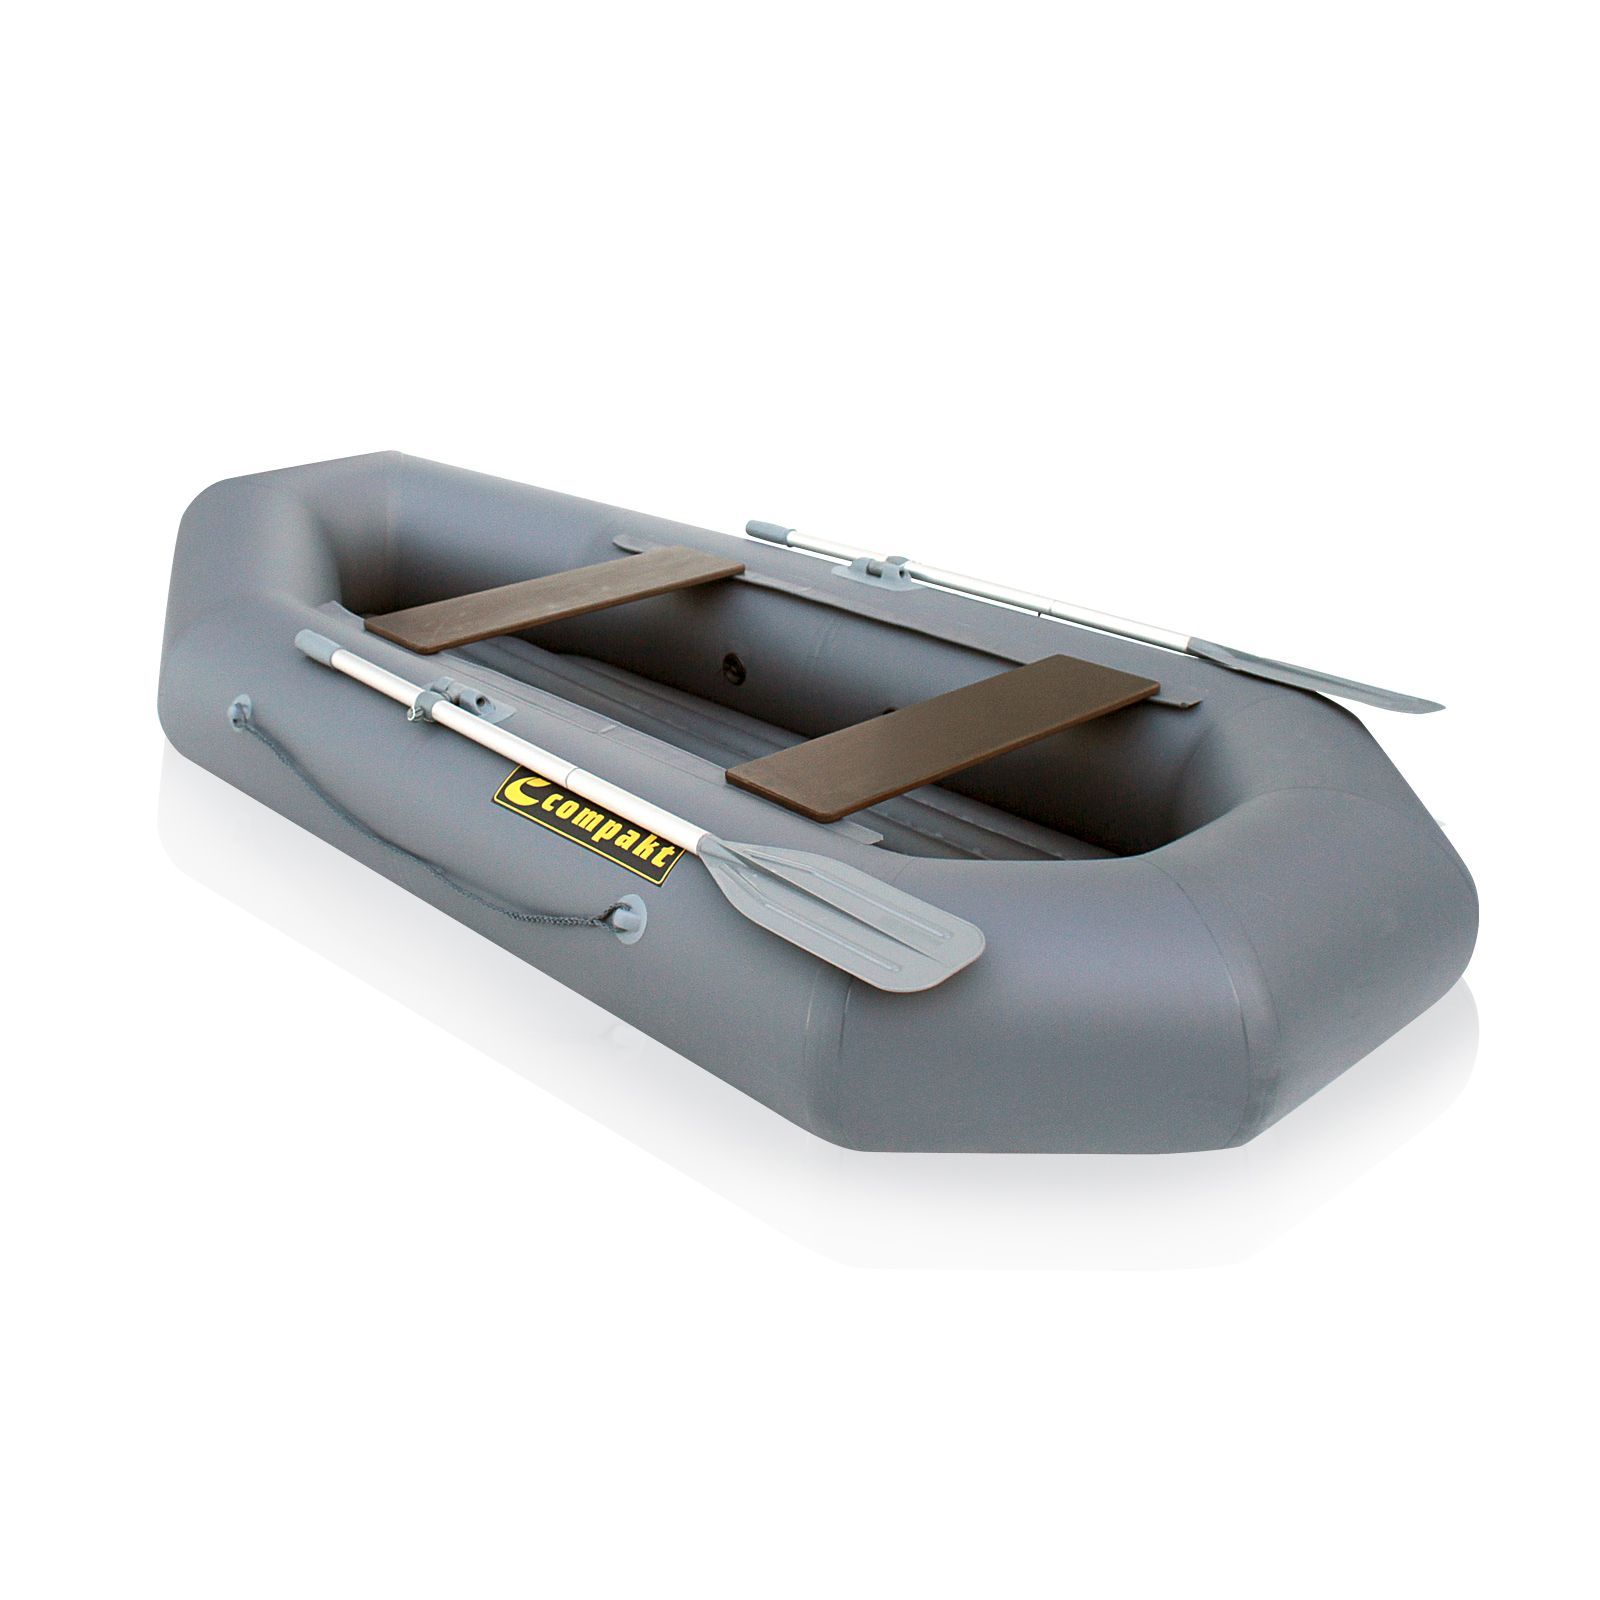 Лодка ПВХ Компакт-240N- НД надувное дно серый цвет упаковка-мешок оксфорд